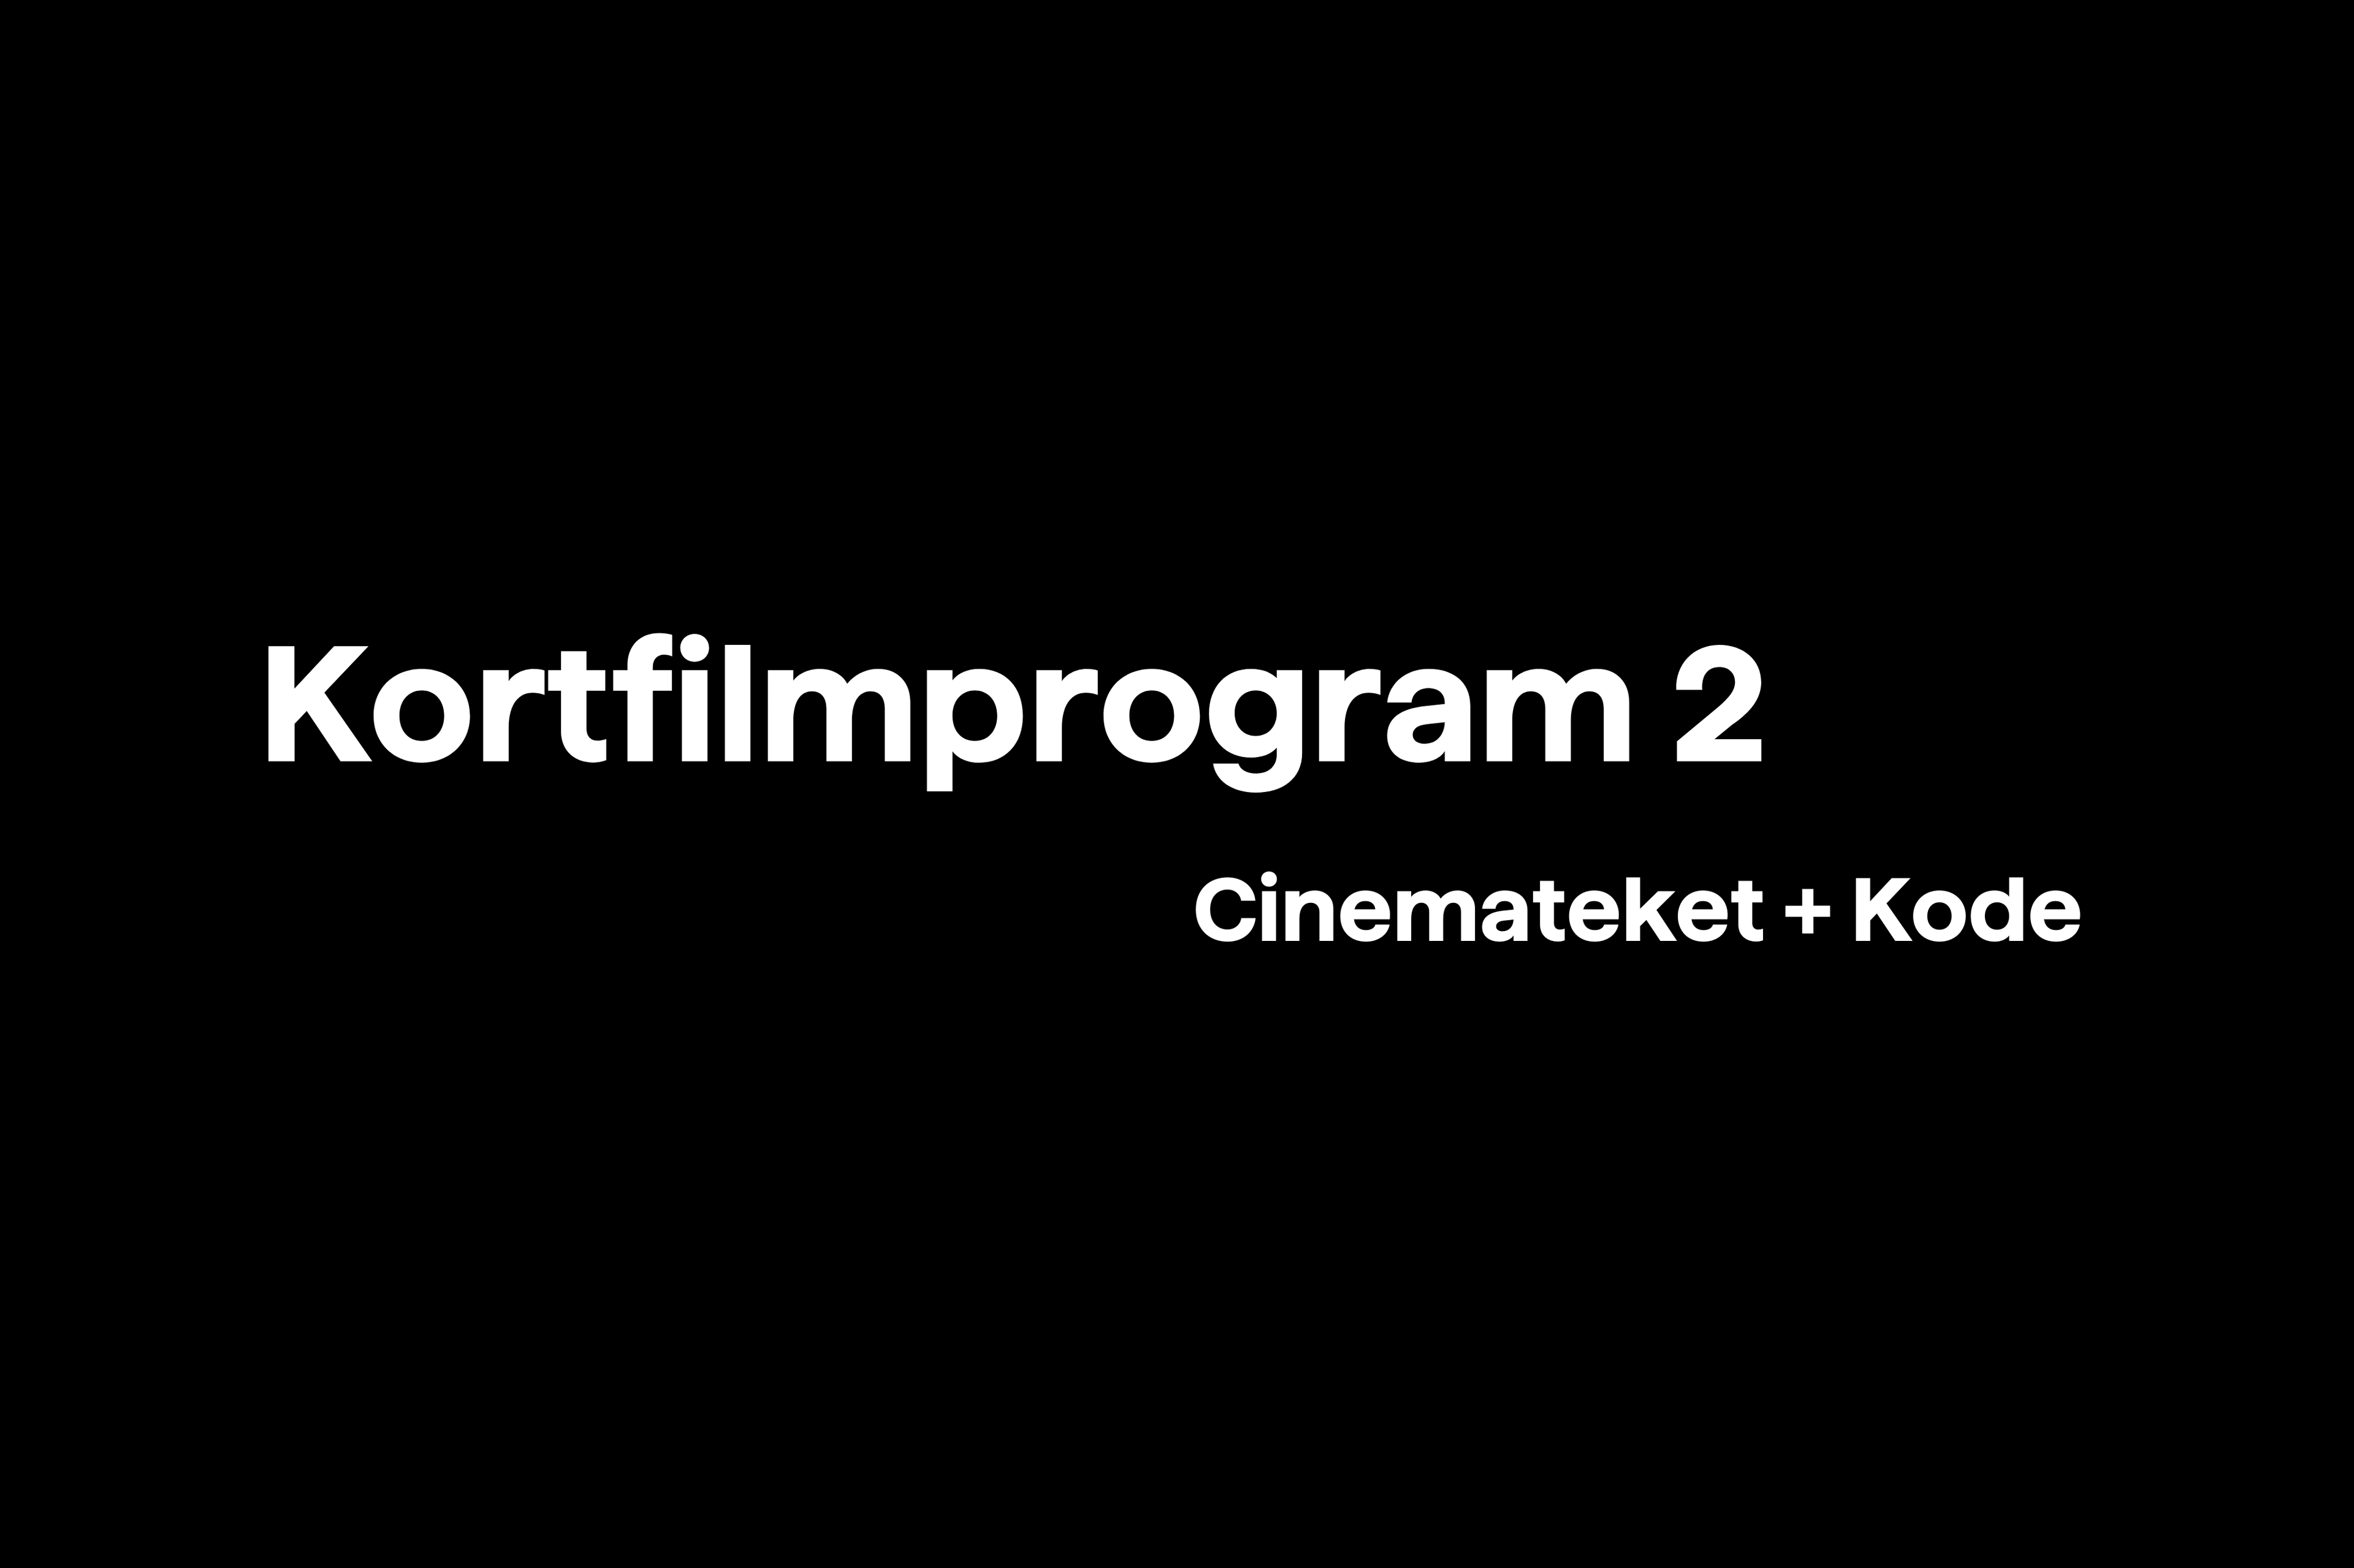 Cinemateket + Kode